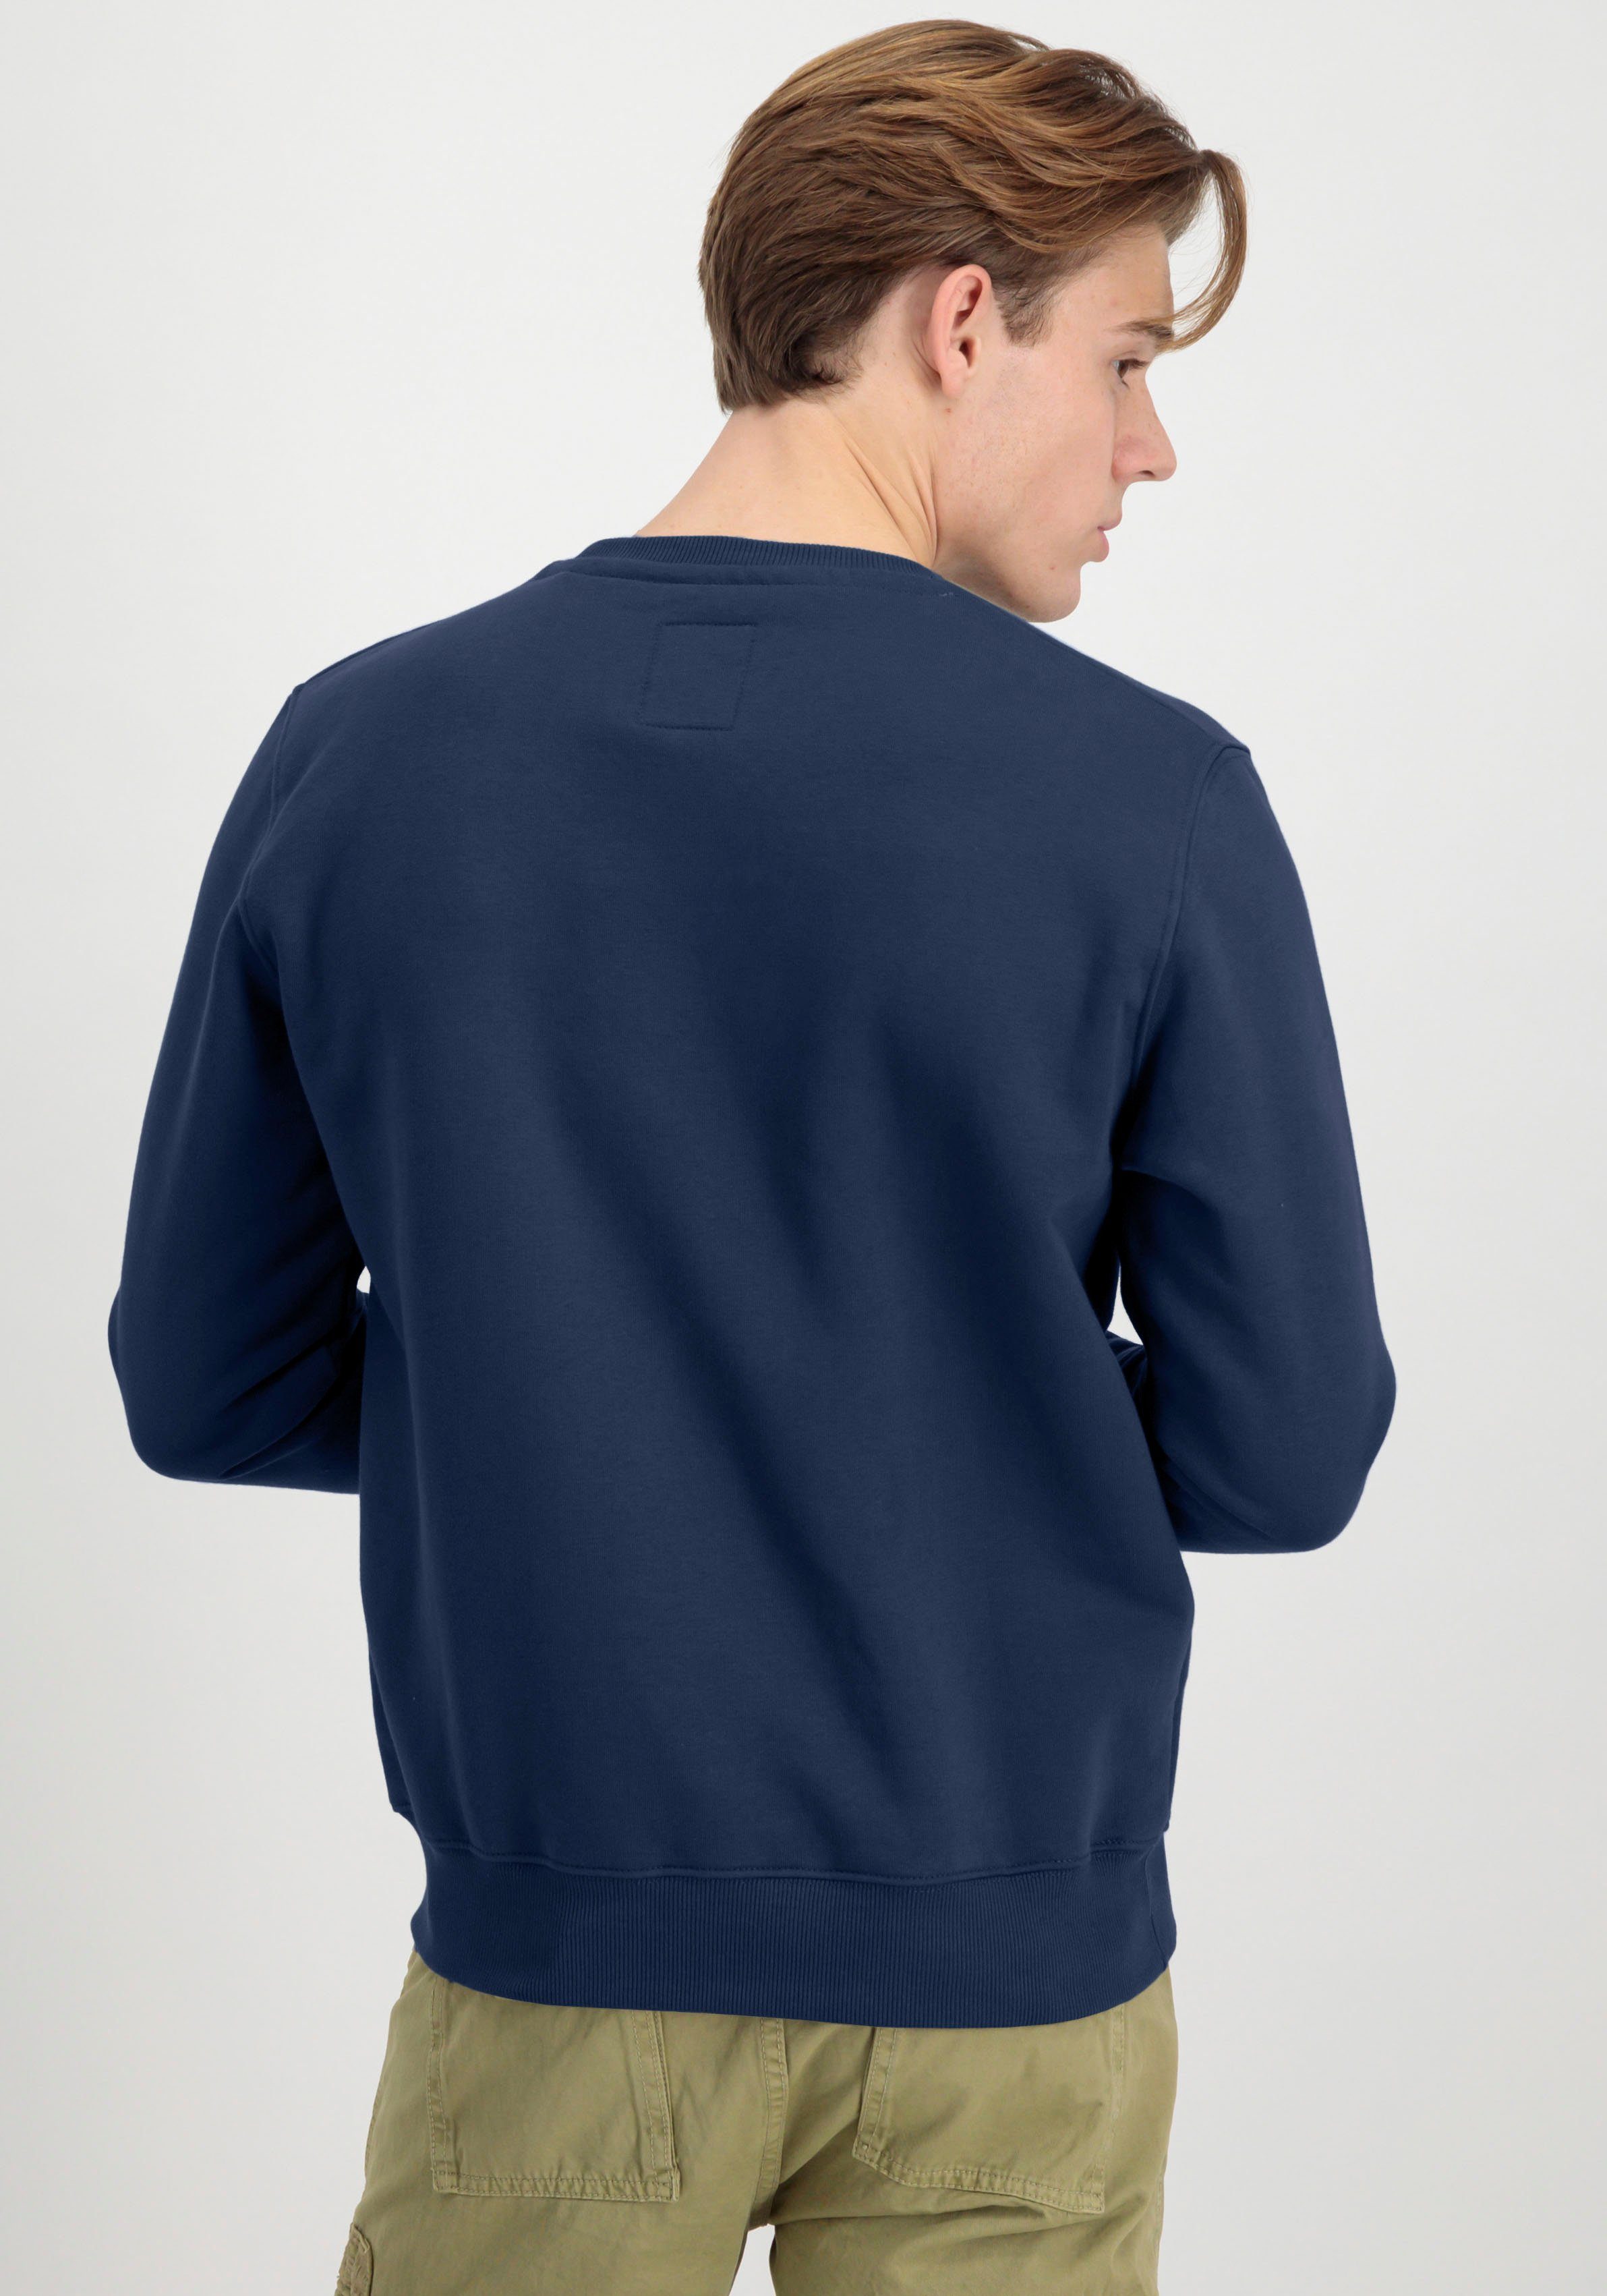 navy Sweatshirt Basic Sweater Alpha Industries new